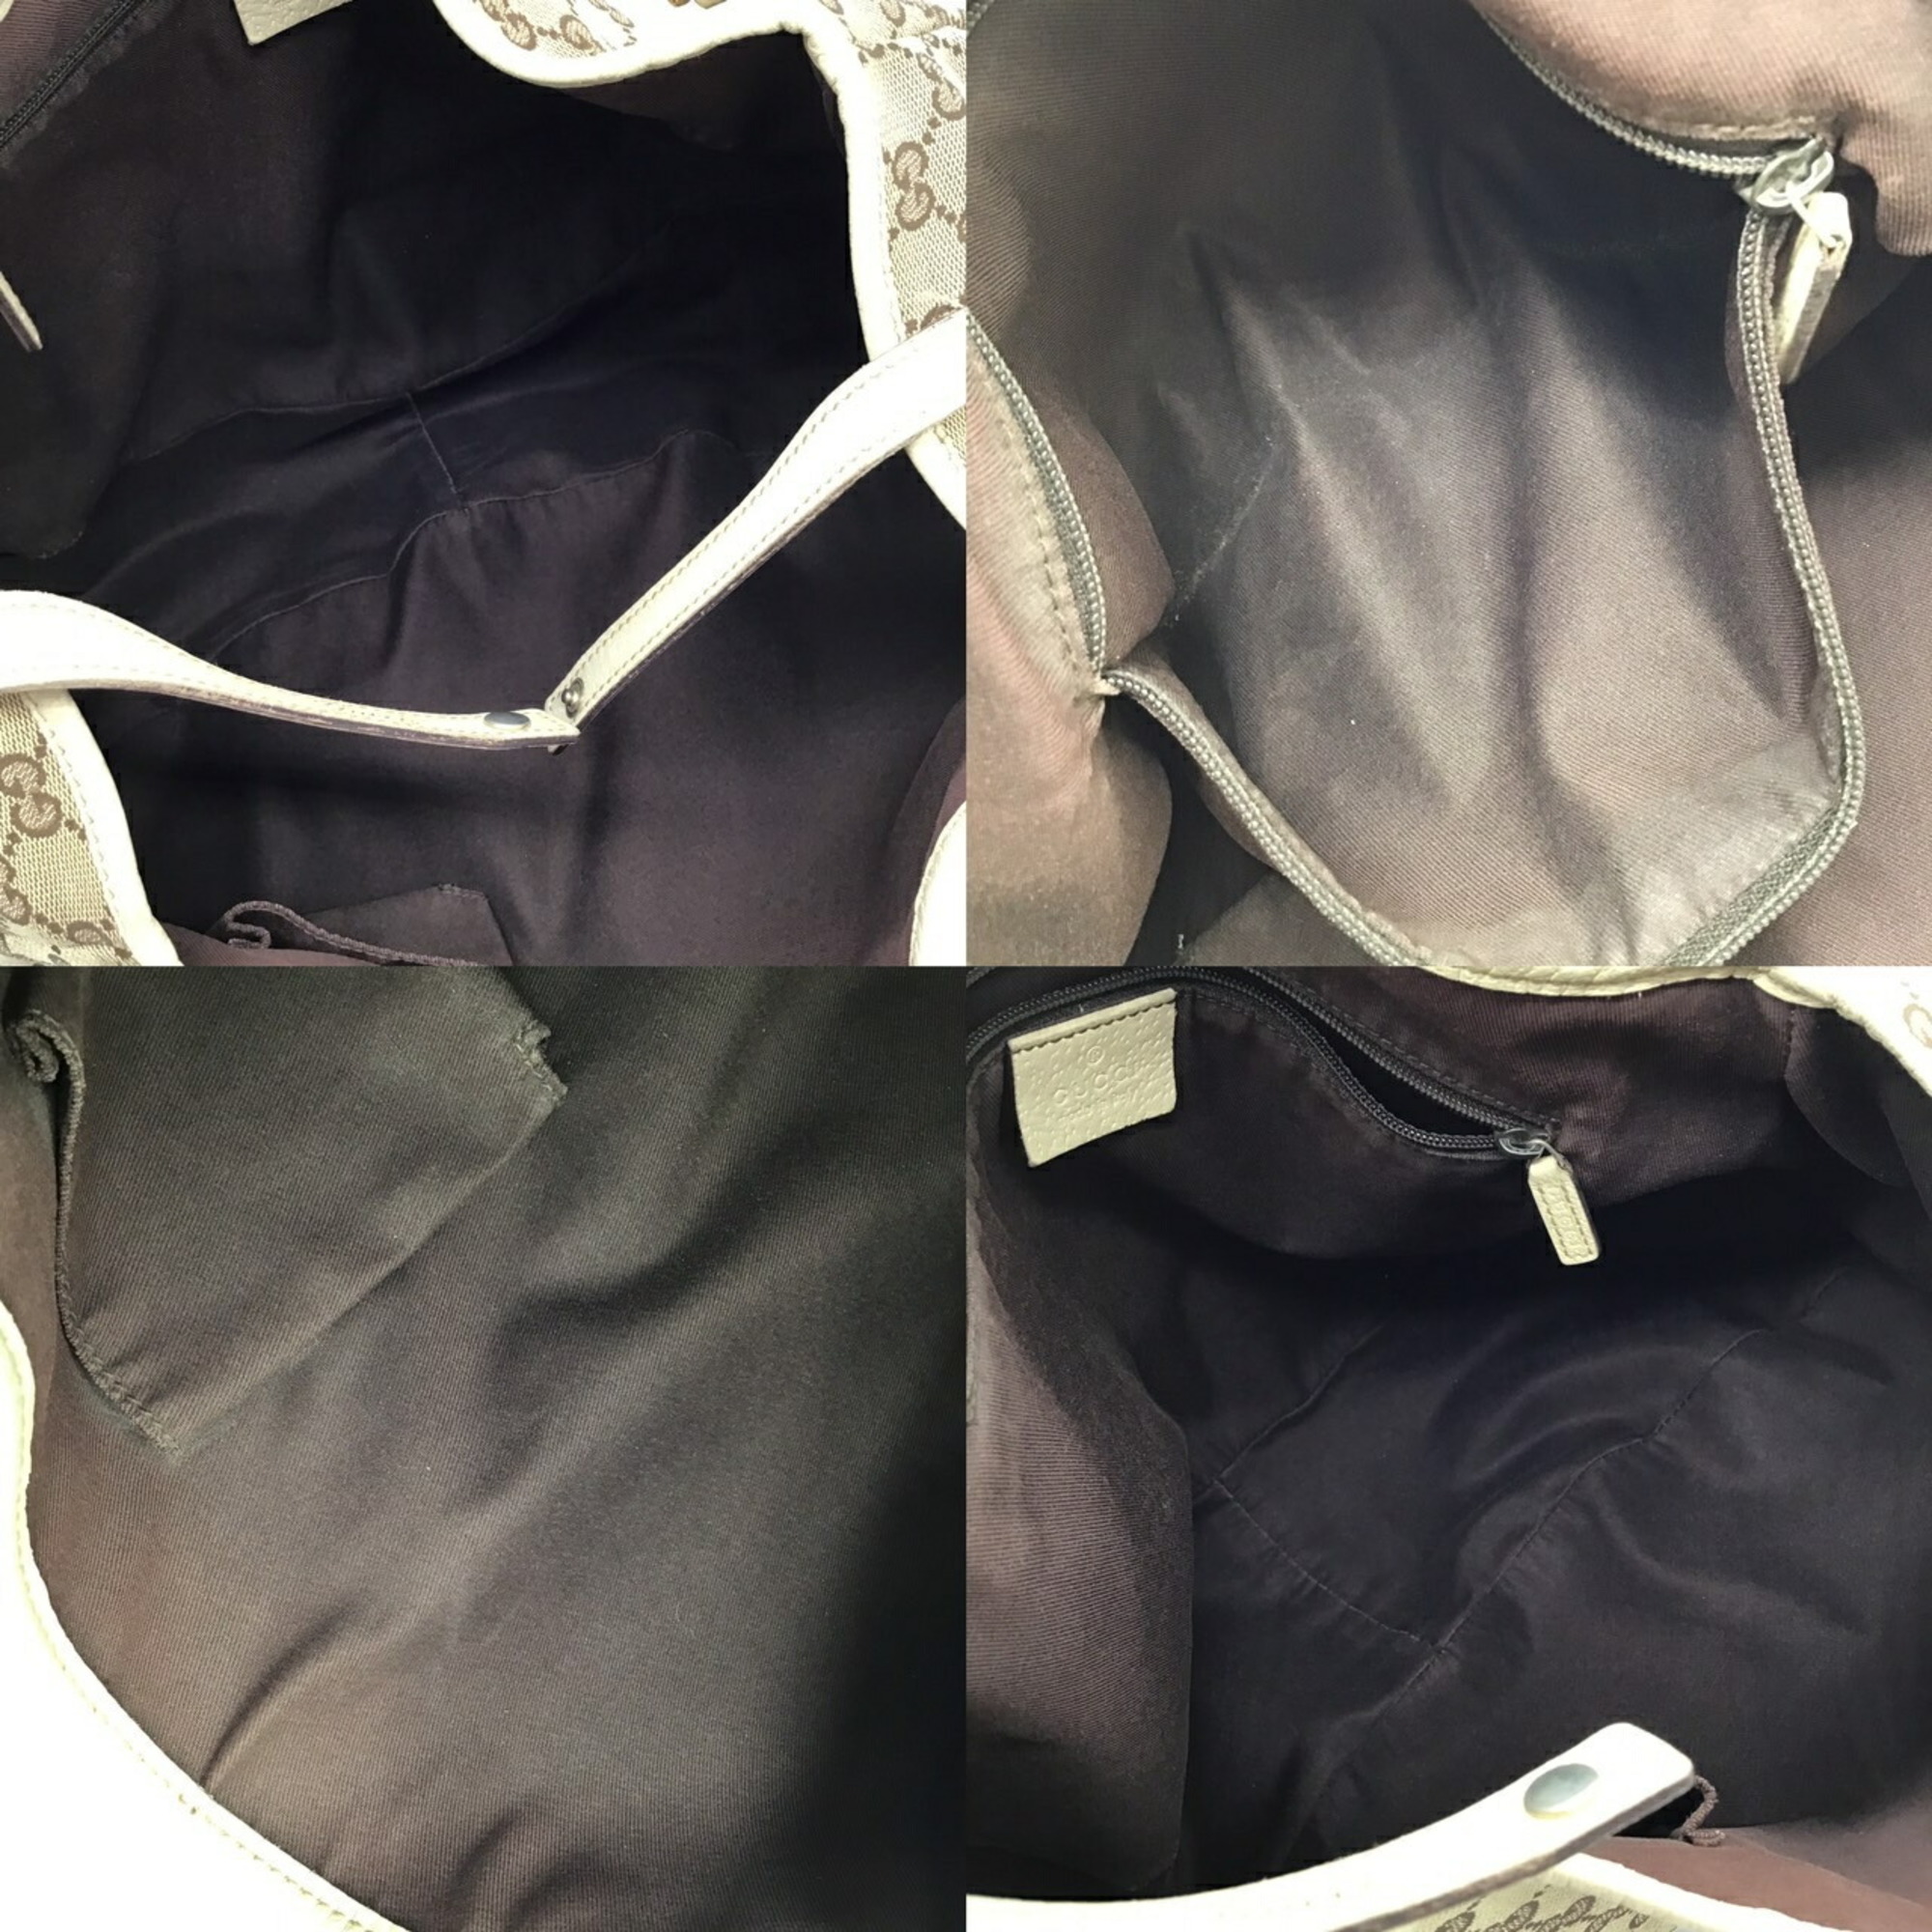 GUCCI Gucci GG Canvas Handbag Shoulder Bag 130736 Ivory Beige Brown Shopping Women's